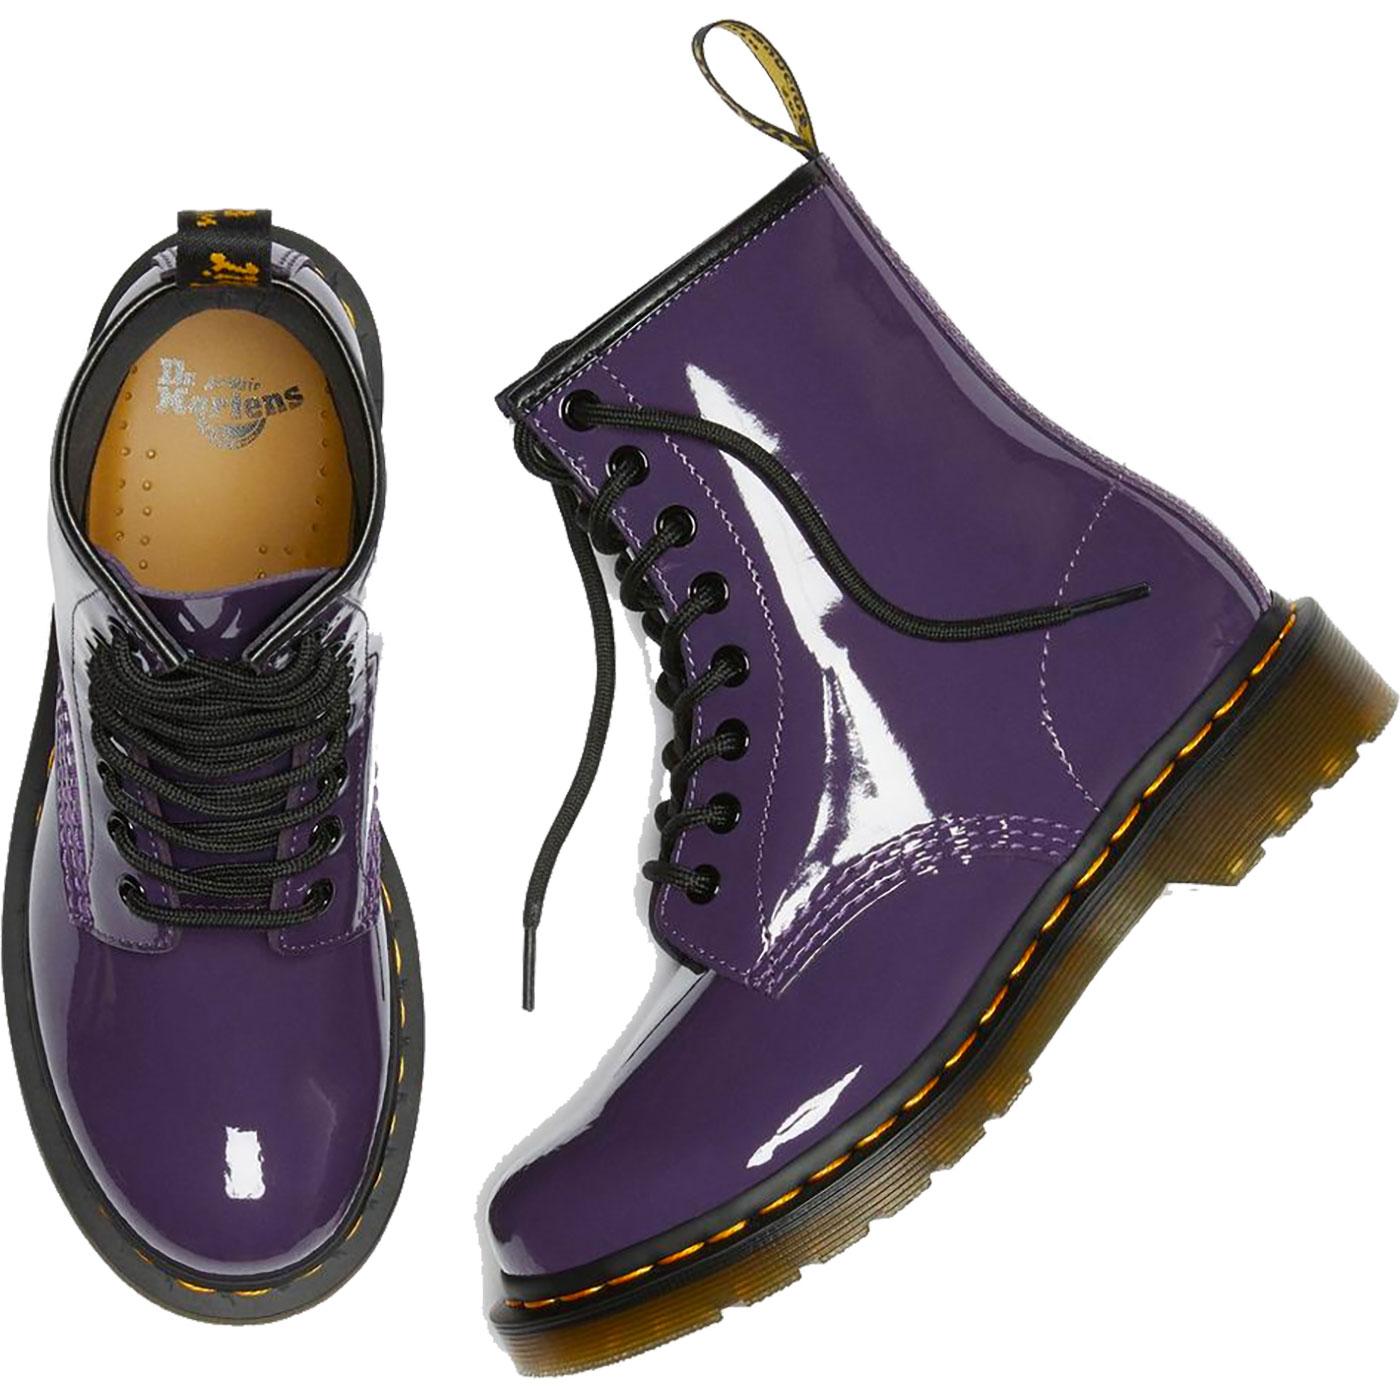 DR MARTENS 1460 Patent Lamper Women's Boots in Purple